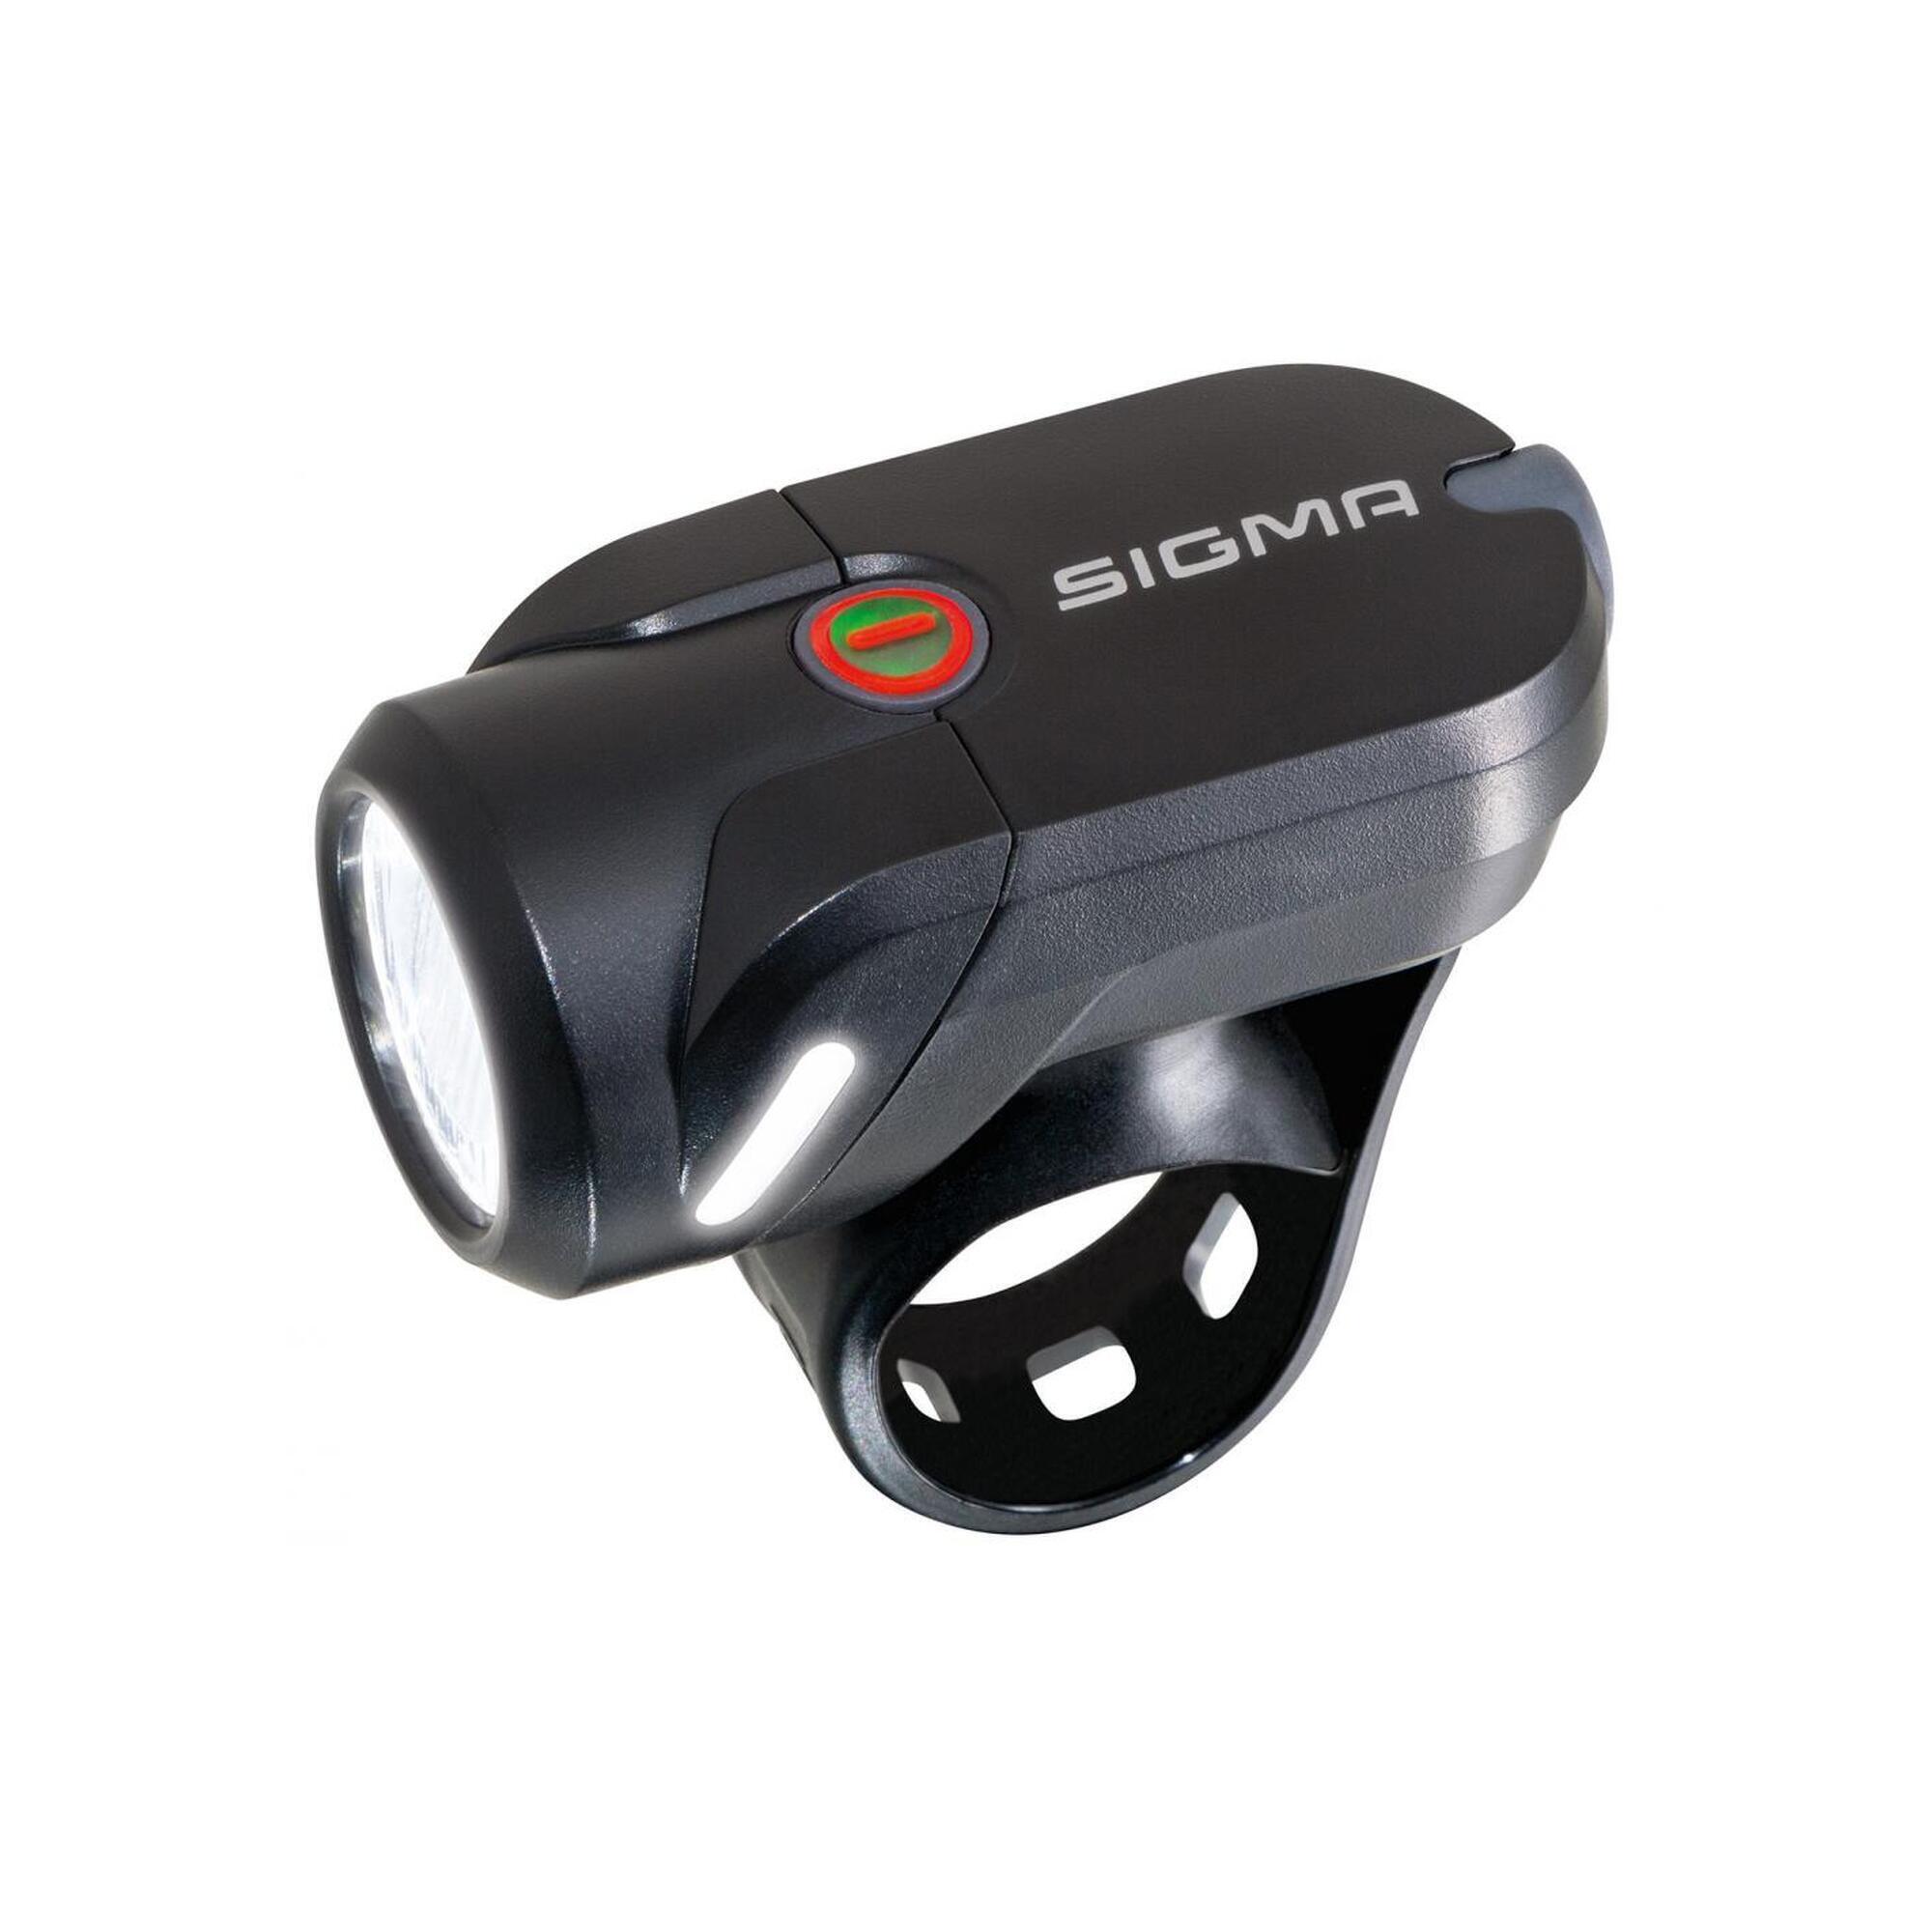 SIGMA SPORT Sigma Aura 35L Headlight with handlebar mount